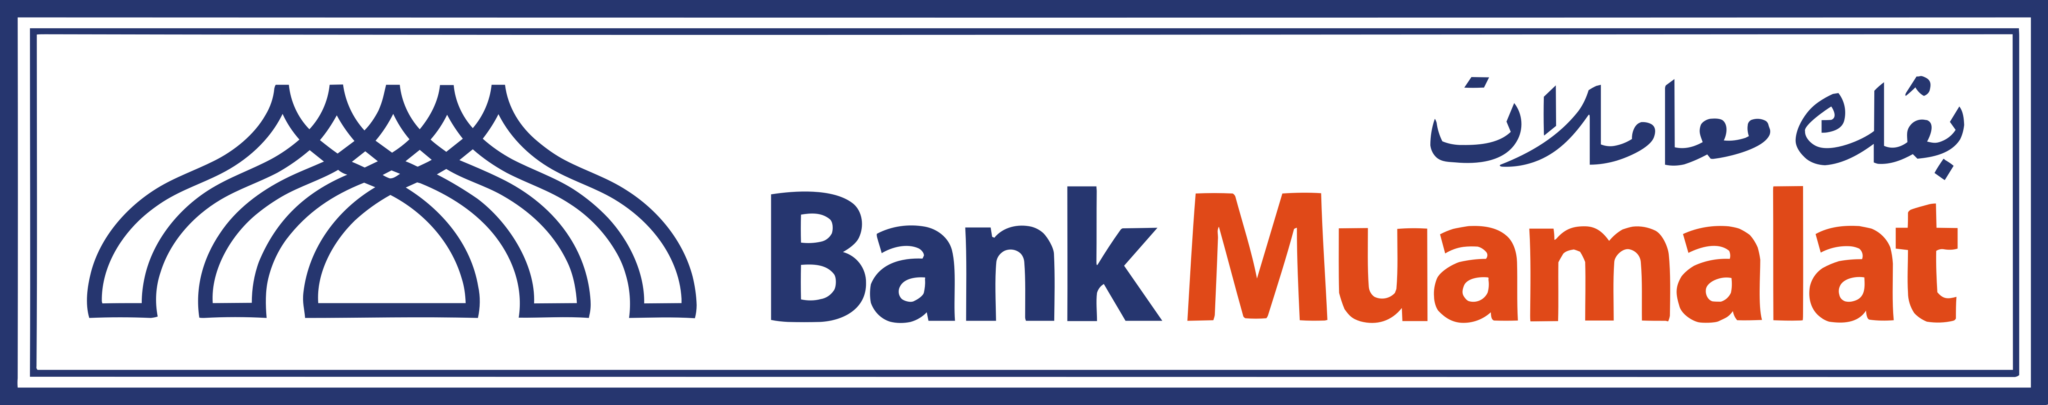 Old National Bank – Logos Download